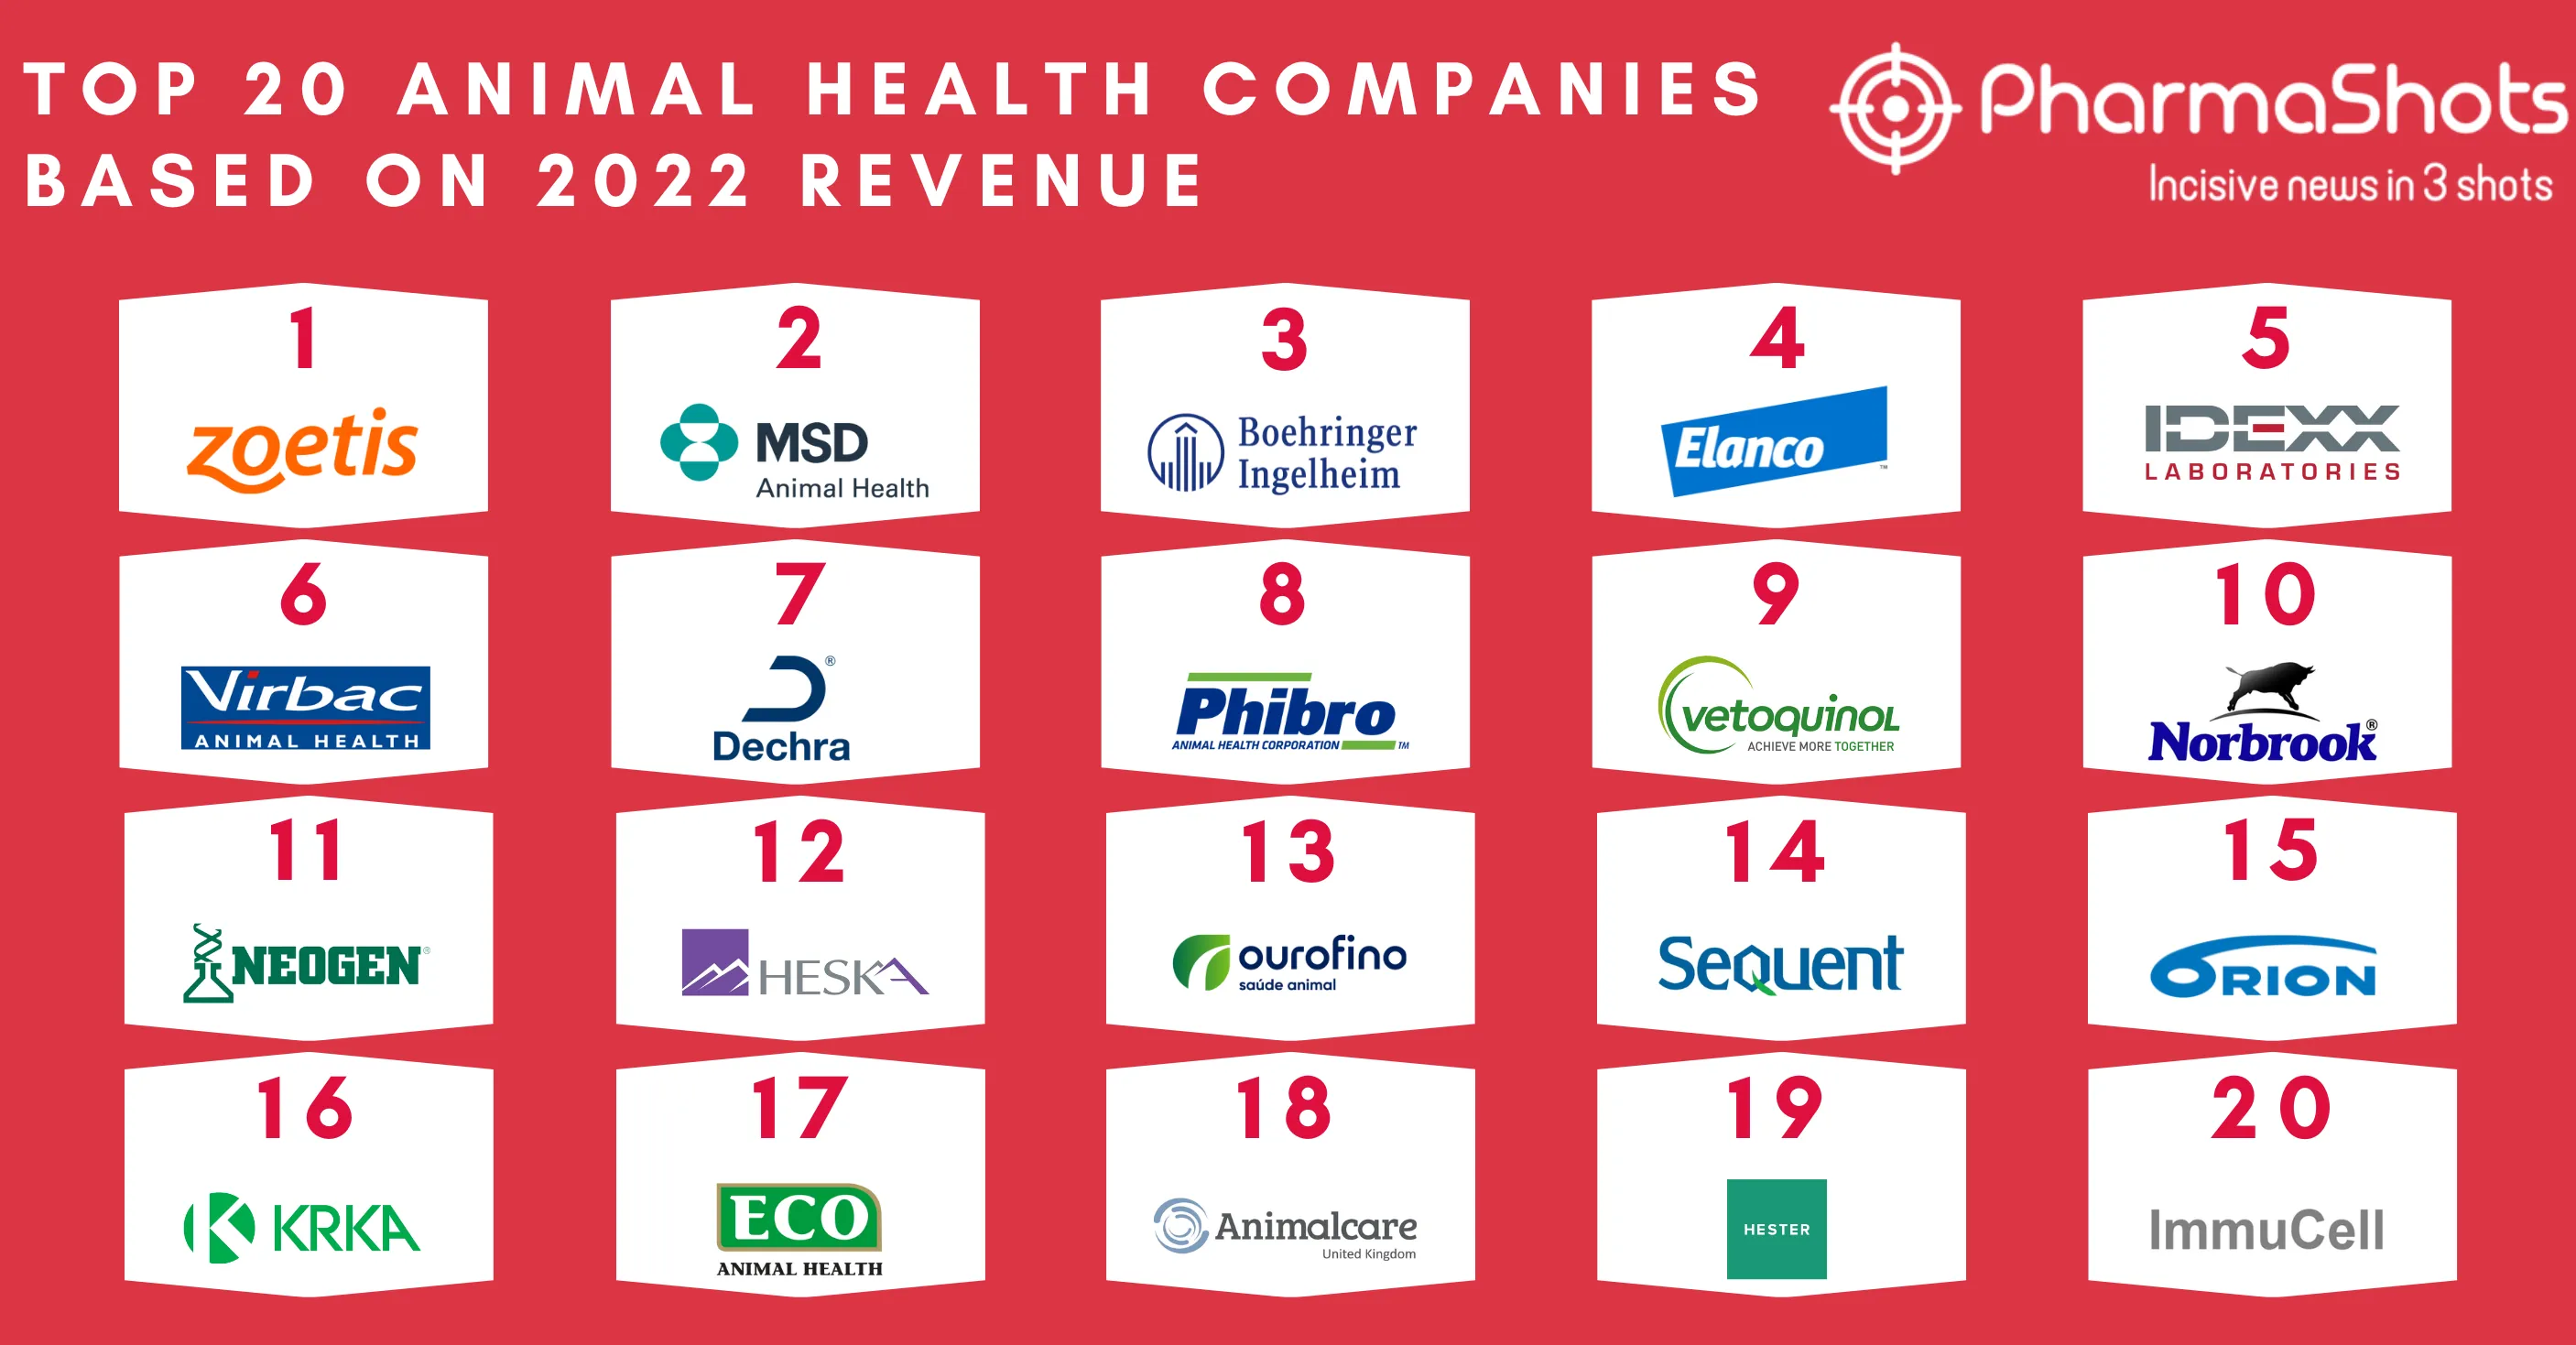 Top 20 Animal Health Companies Based on 2022 Total Revenue